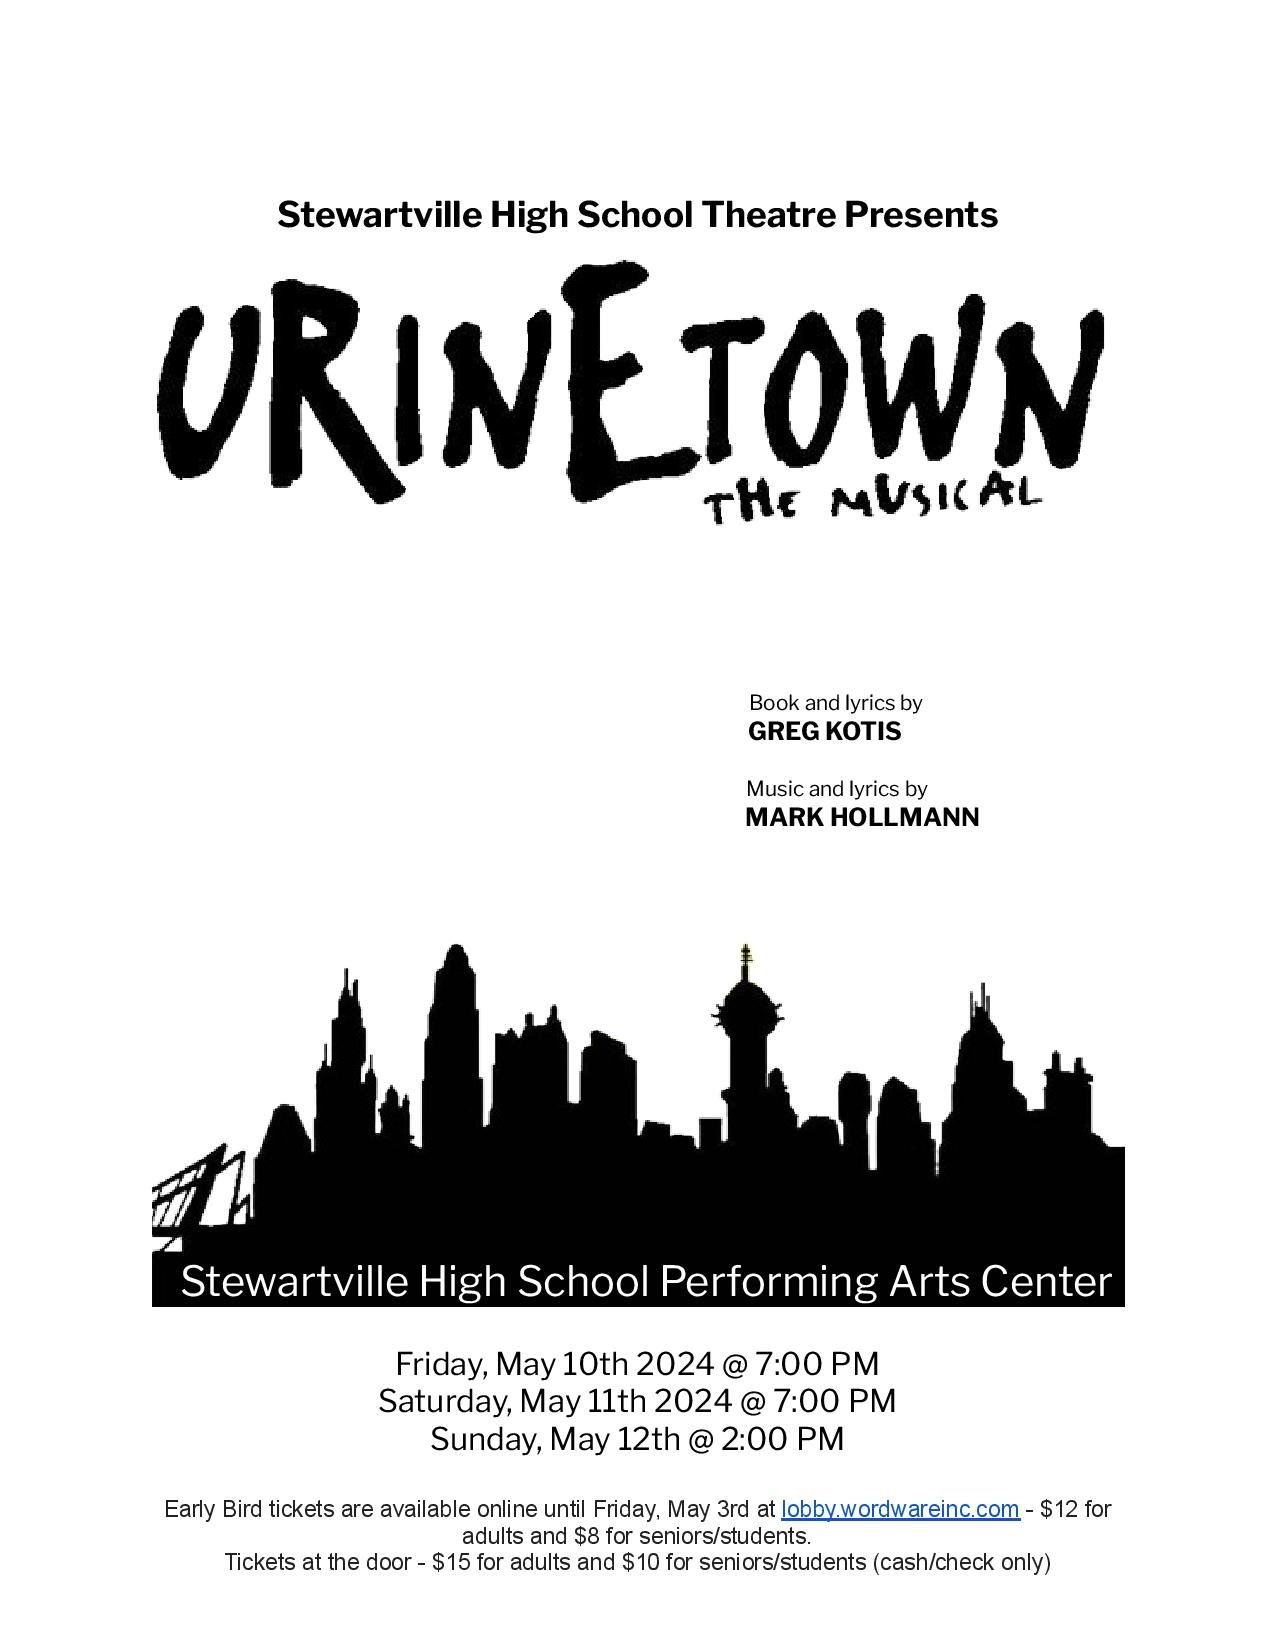 Urinetown Poster - Google Docs-page-001.jpg